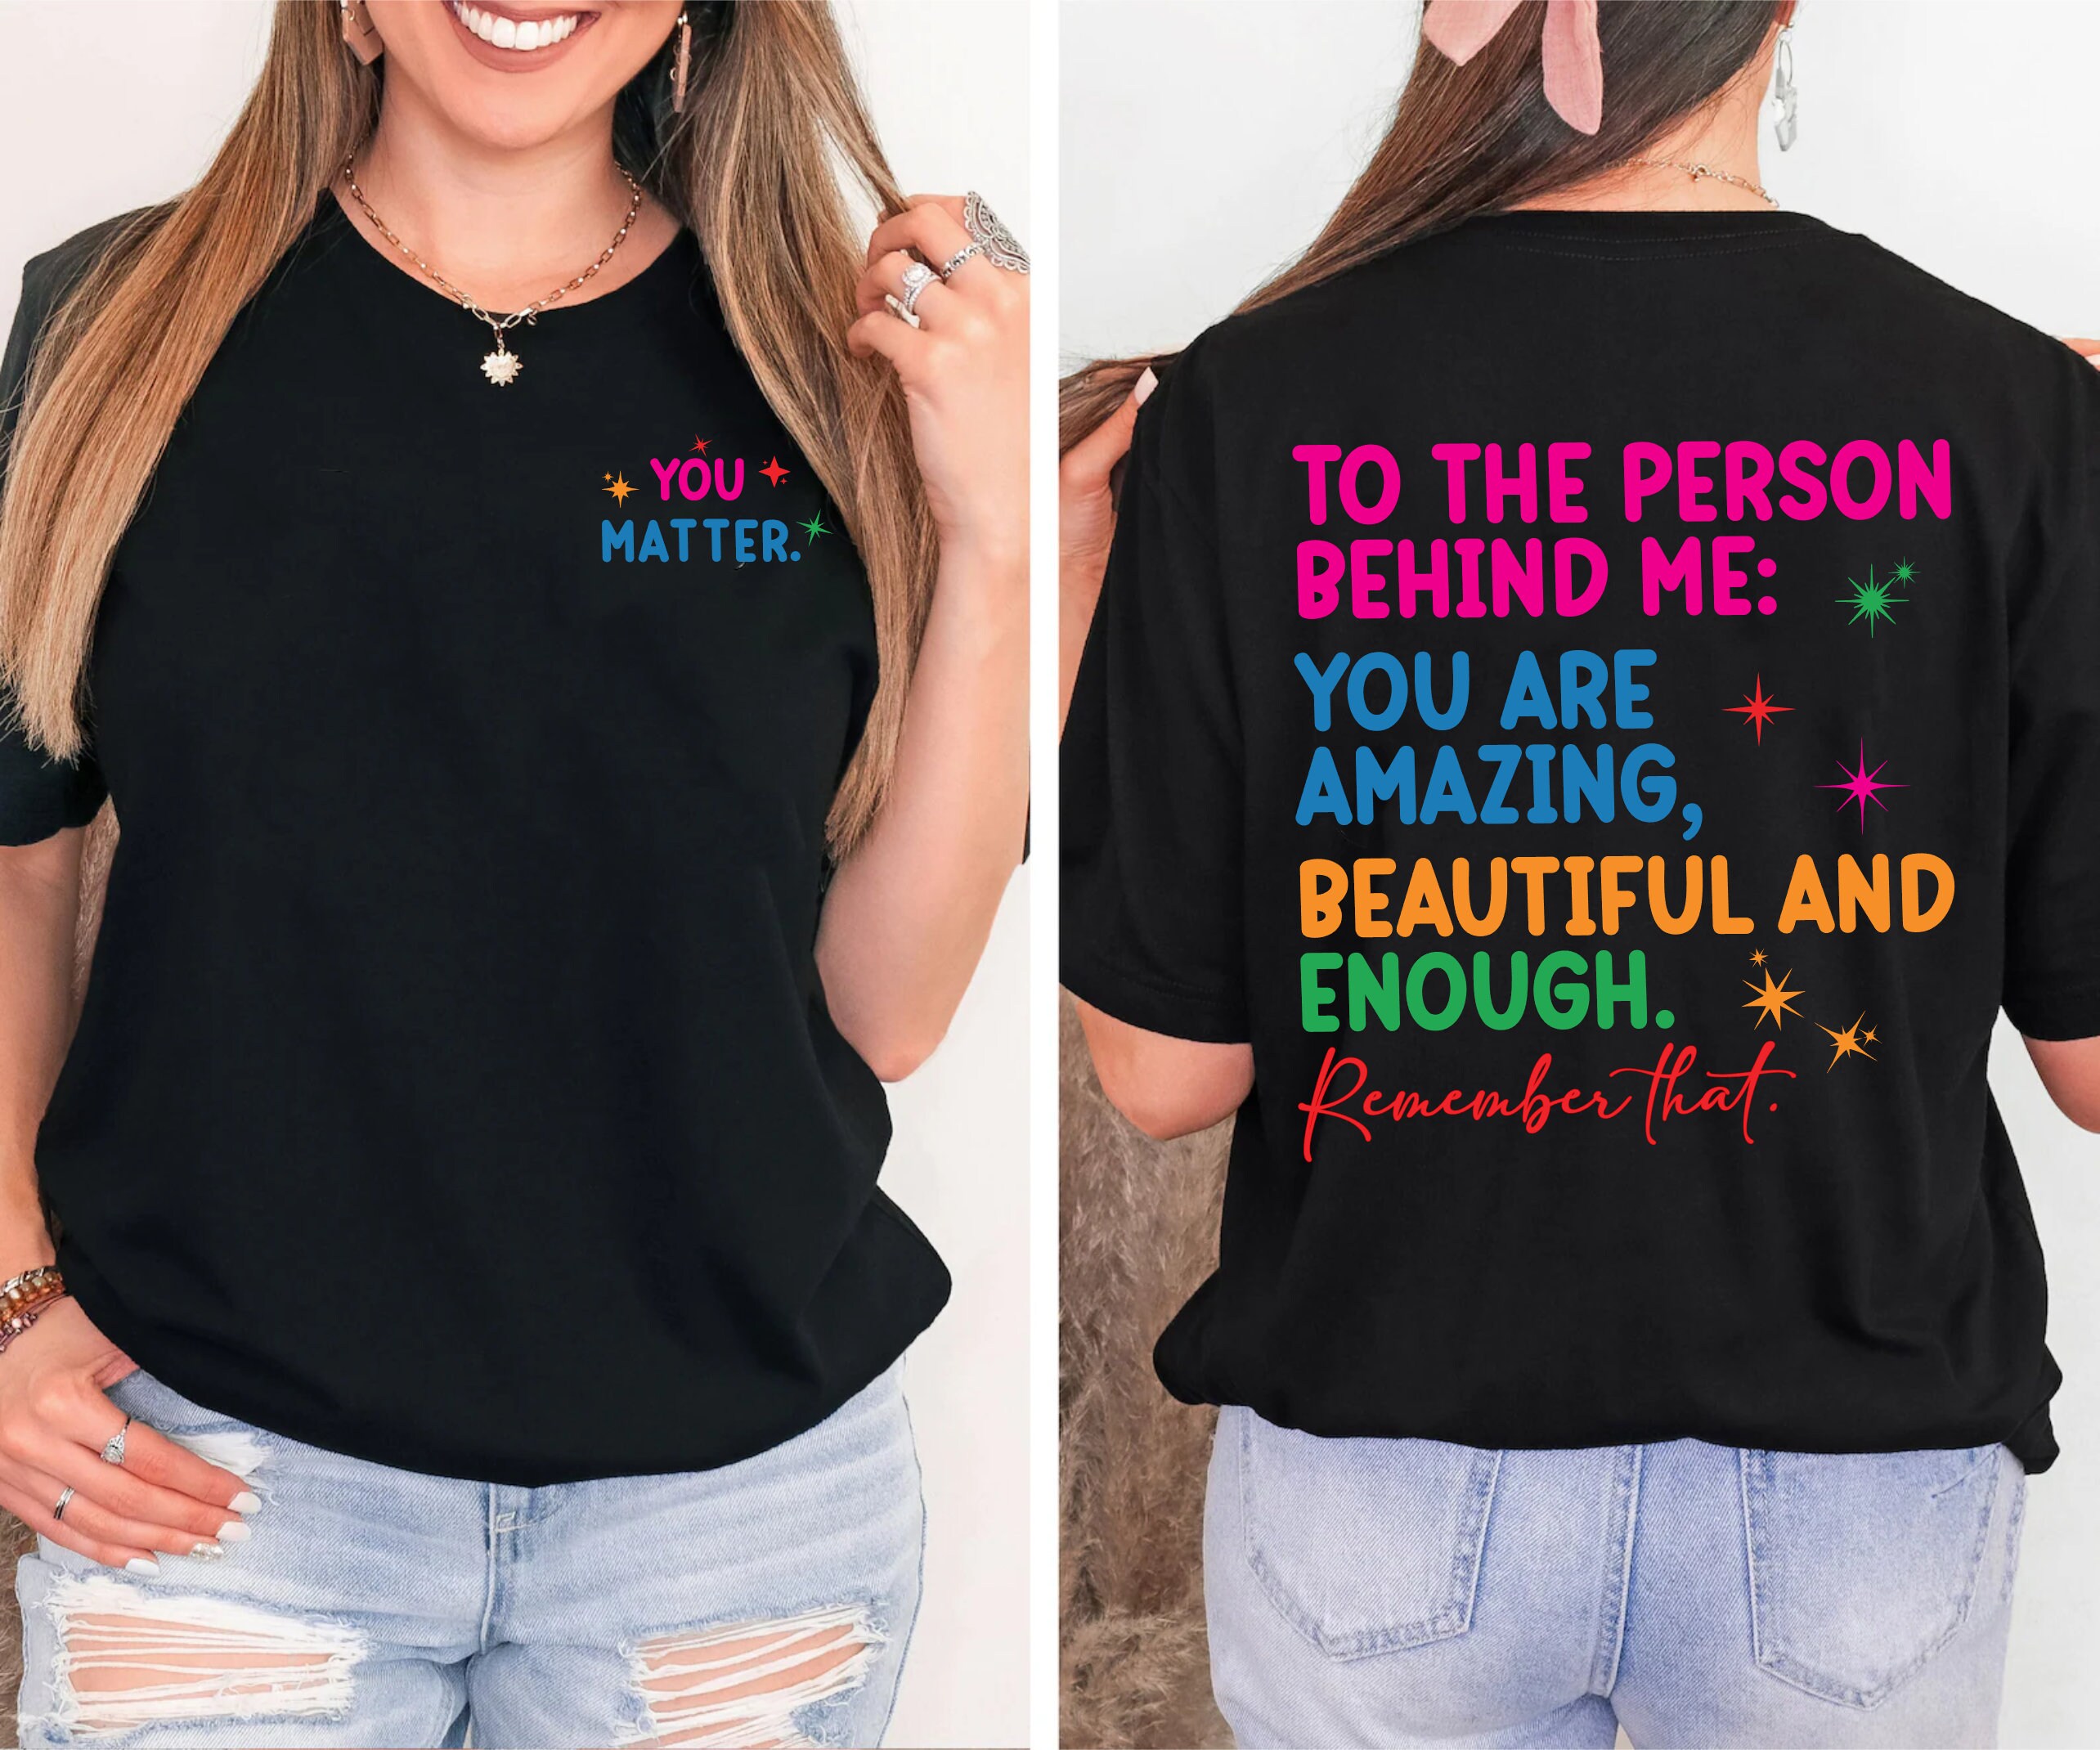 Discover Dear Person Behind Me Shirt, You Matter Shirt, You Are Enough Shirt, Mental Health Matters Shirt, Kindness Shirt